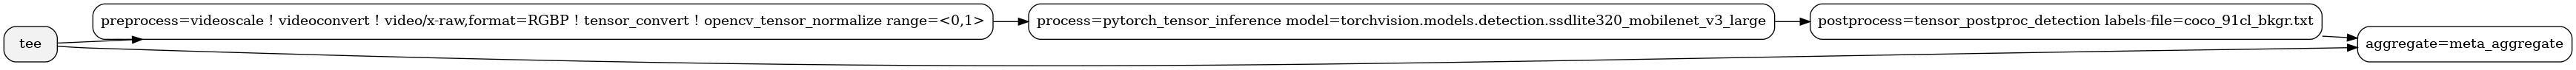 digraph {
  rankdir="LR"
  node[shape=box, style="rounded, filled", fillcolor=white]

  tee[label="tee", fillcolor=gray95]
  preproc[label="preprocess=videoscale ! videoconvert ! video/x-raw,format=RGBP ! tensor_convert ! opencv_tensor_normalize range=<0,1>"]
  processing[label="process=pytorch_tensor_inference model=torchvision.models.detection.ssdlite320_mobilenet_v3_large"]
  postproc[label="postprocess=tensor_postproc_detection labels-file=coco_91cl_bkgr.txt"]
  aggregate[label="aggregate=meta_aggregate"]

  tee -> preproc -> processing -> postproc -> aggregate
  tee -> aggregate
}